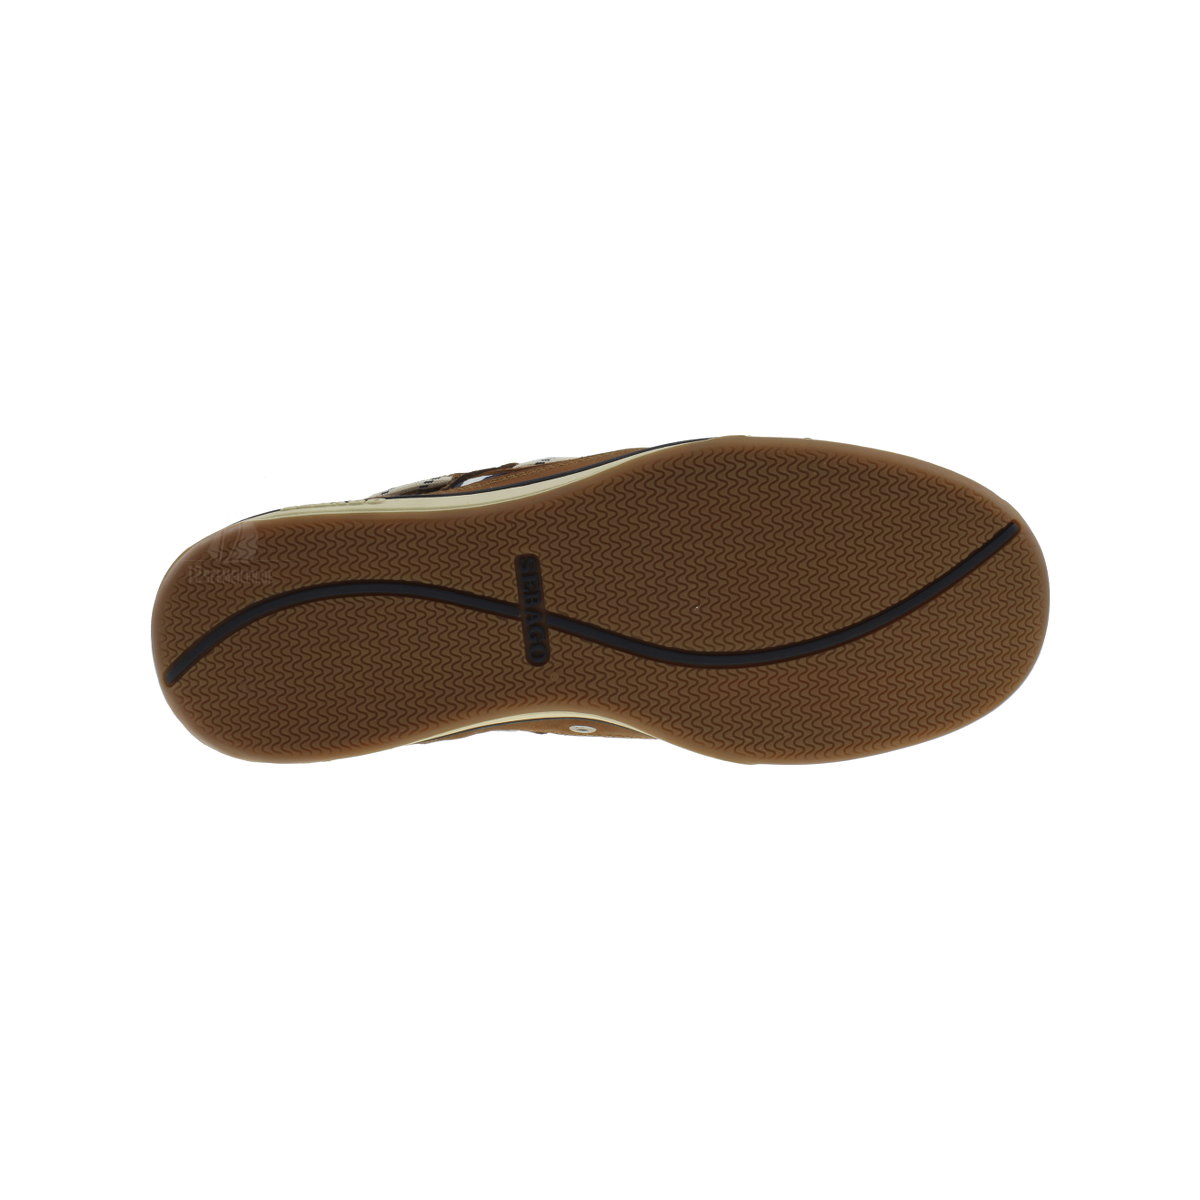 Sebago Triton Three-Eye bootschoen heren british tan/brown leather eu 44 (us 10)